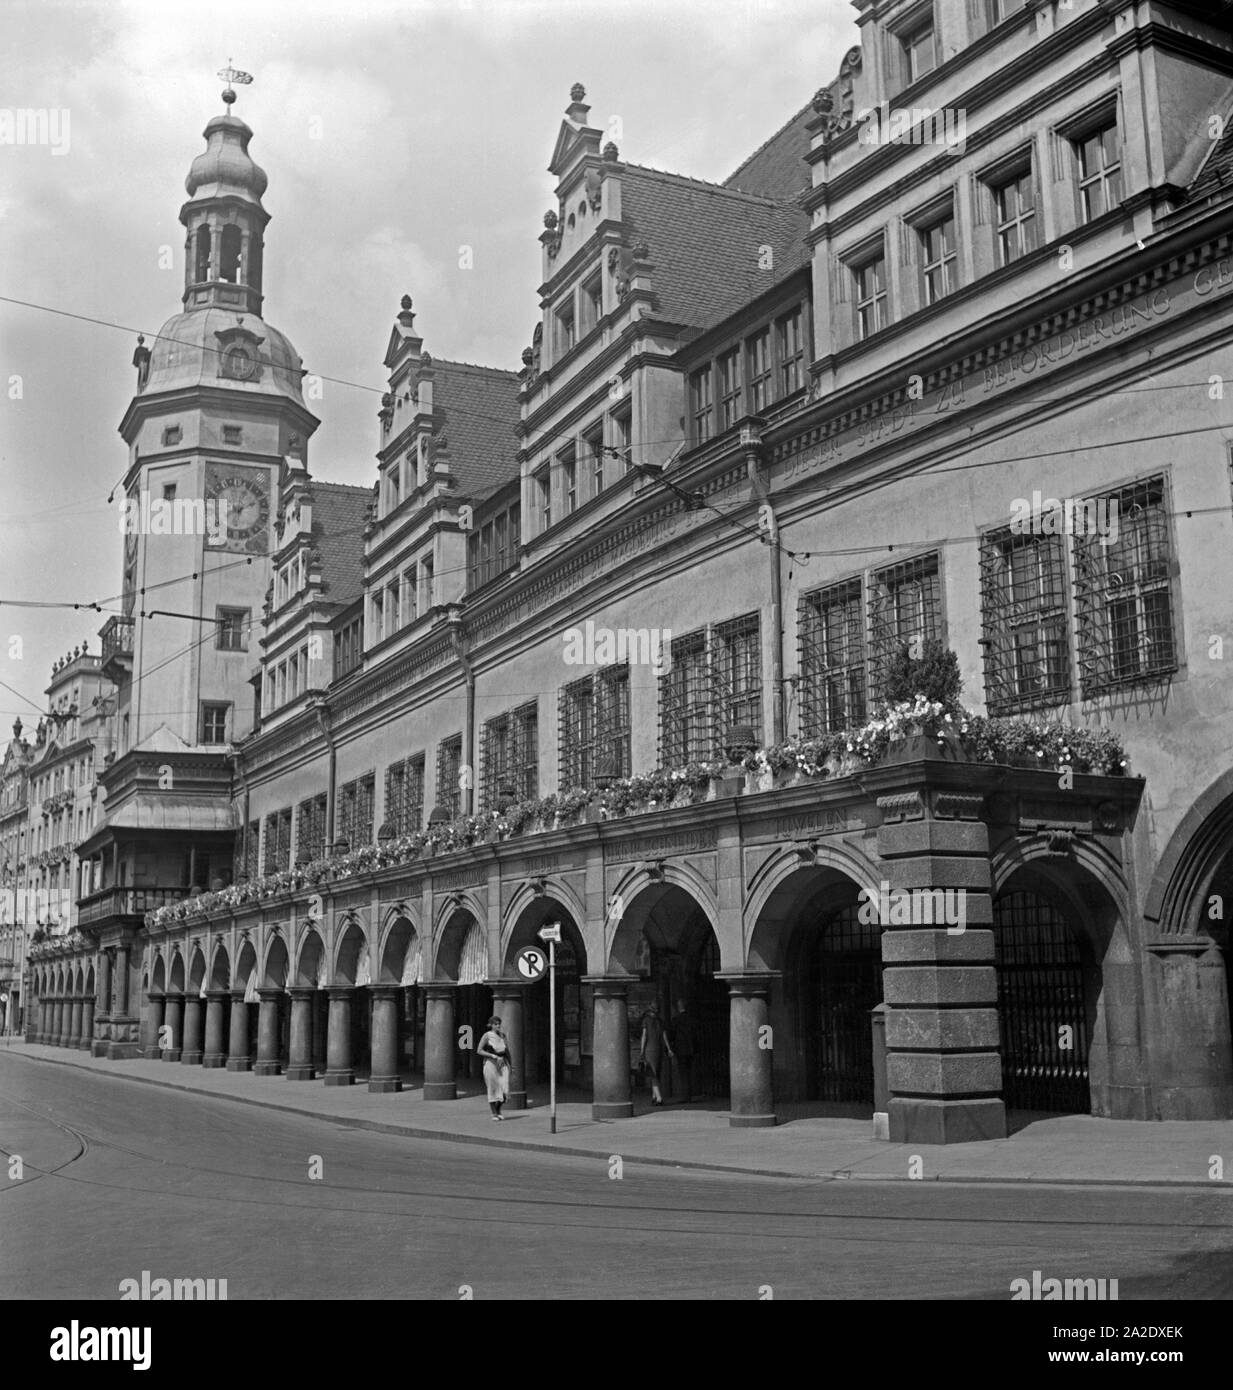 Arkadengang am alten Rathaus in Leipzg, Deutschland 1930er Jahre. Pavimento coperto al Vecchio Municipio di Lipsia, Germania 1930s. Foto Stock